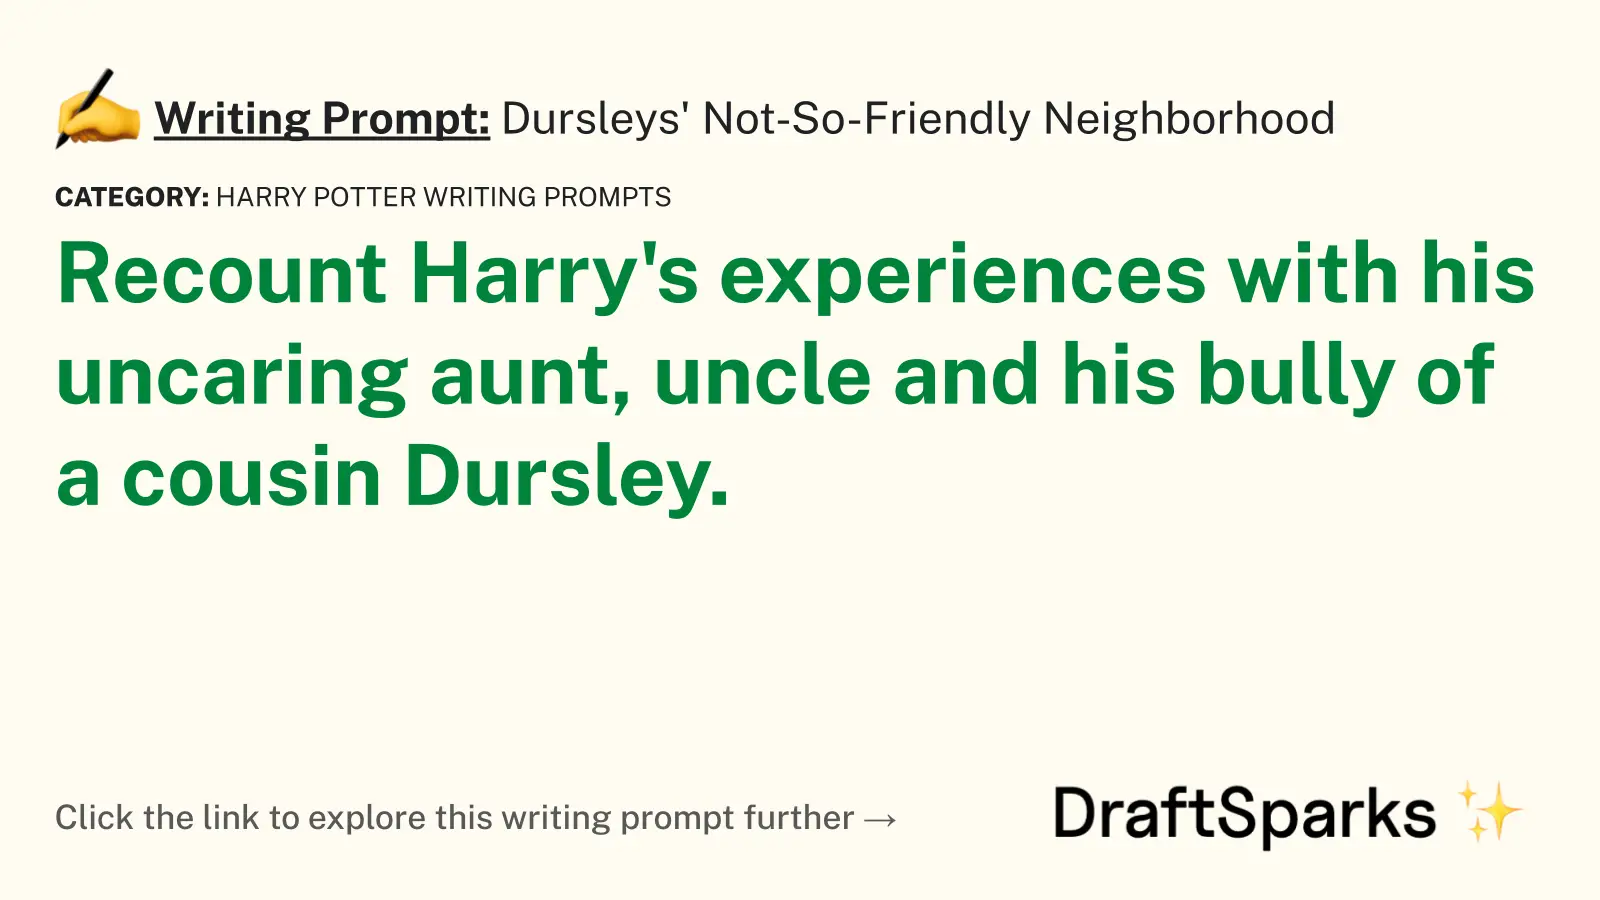 Dursleys’ Not-So-Friendly Neighborhood